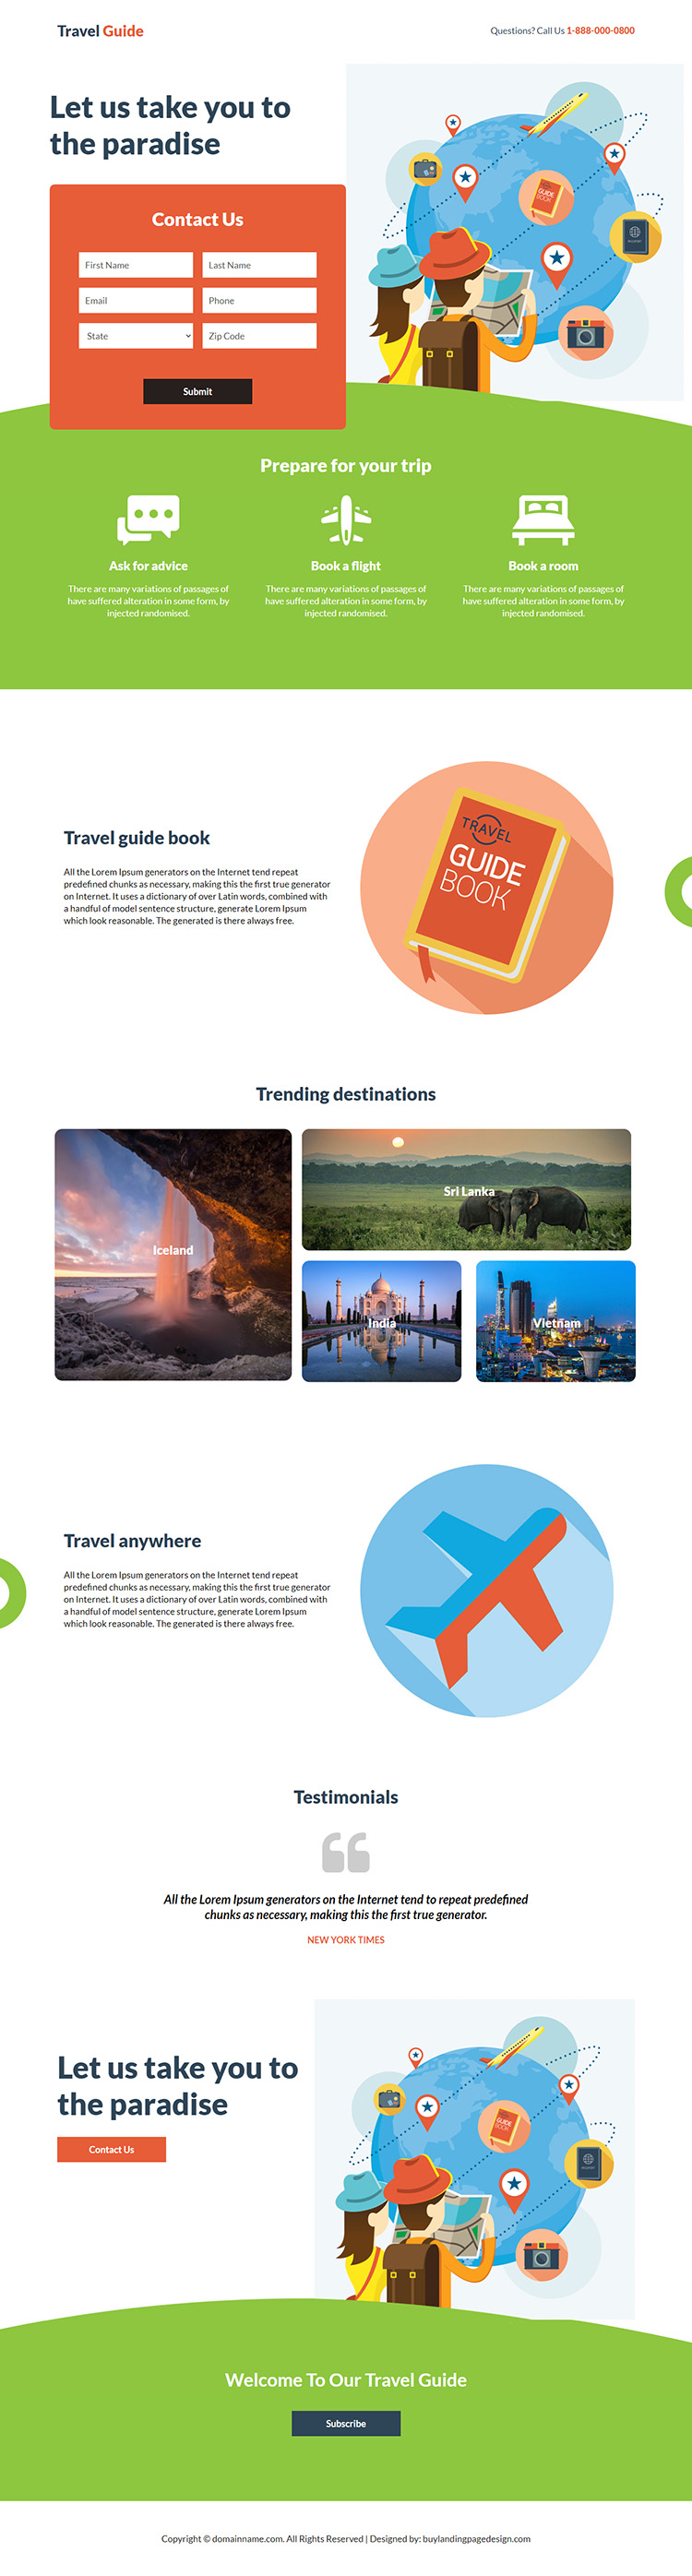 travel guide lead capture responsive landing page design